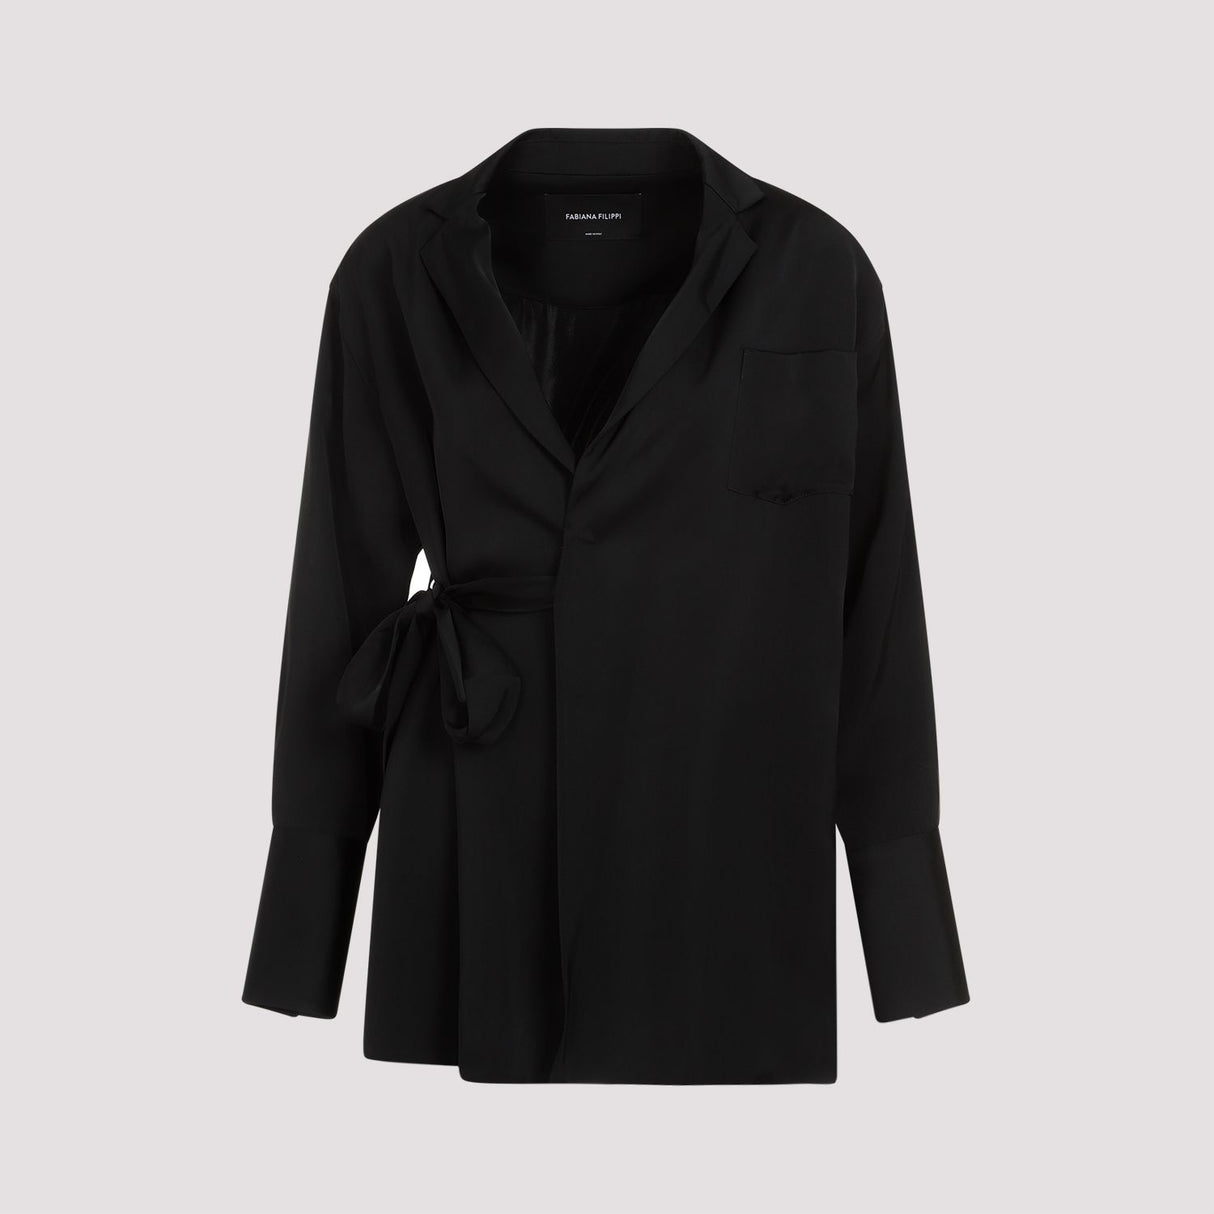 Áo khoác Blazer Viscose đen cho nữ